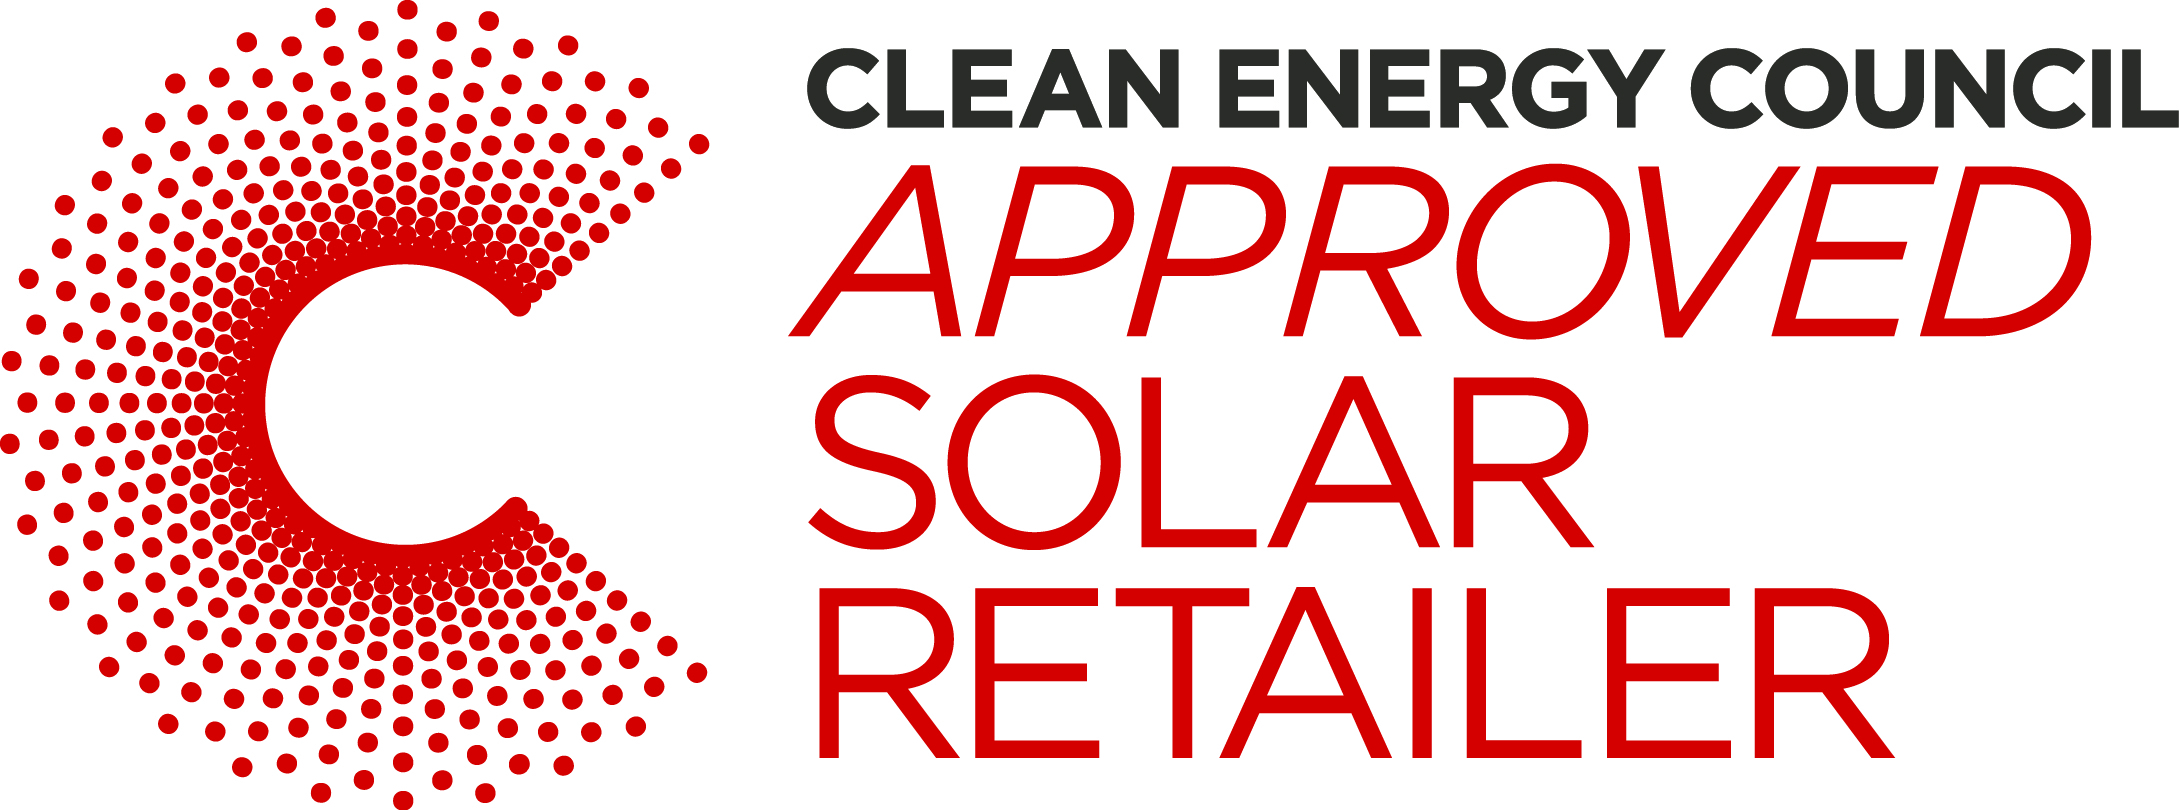 cec solar approved retailer